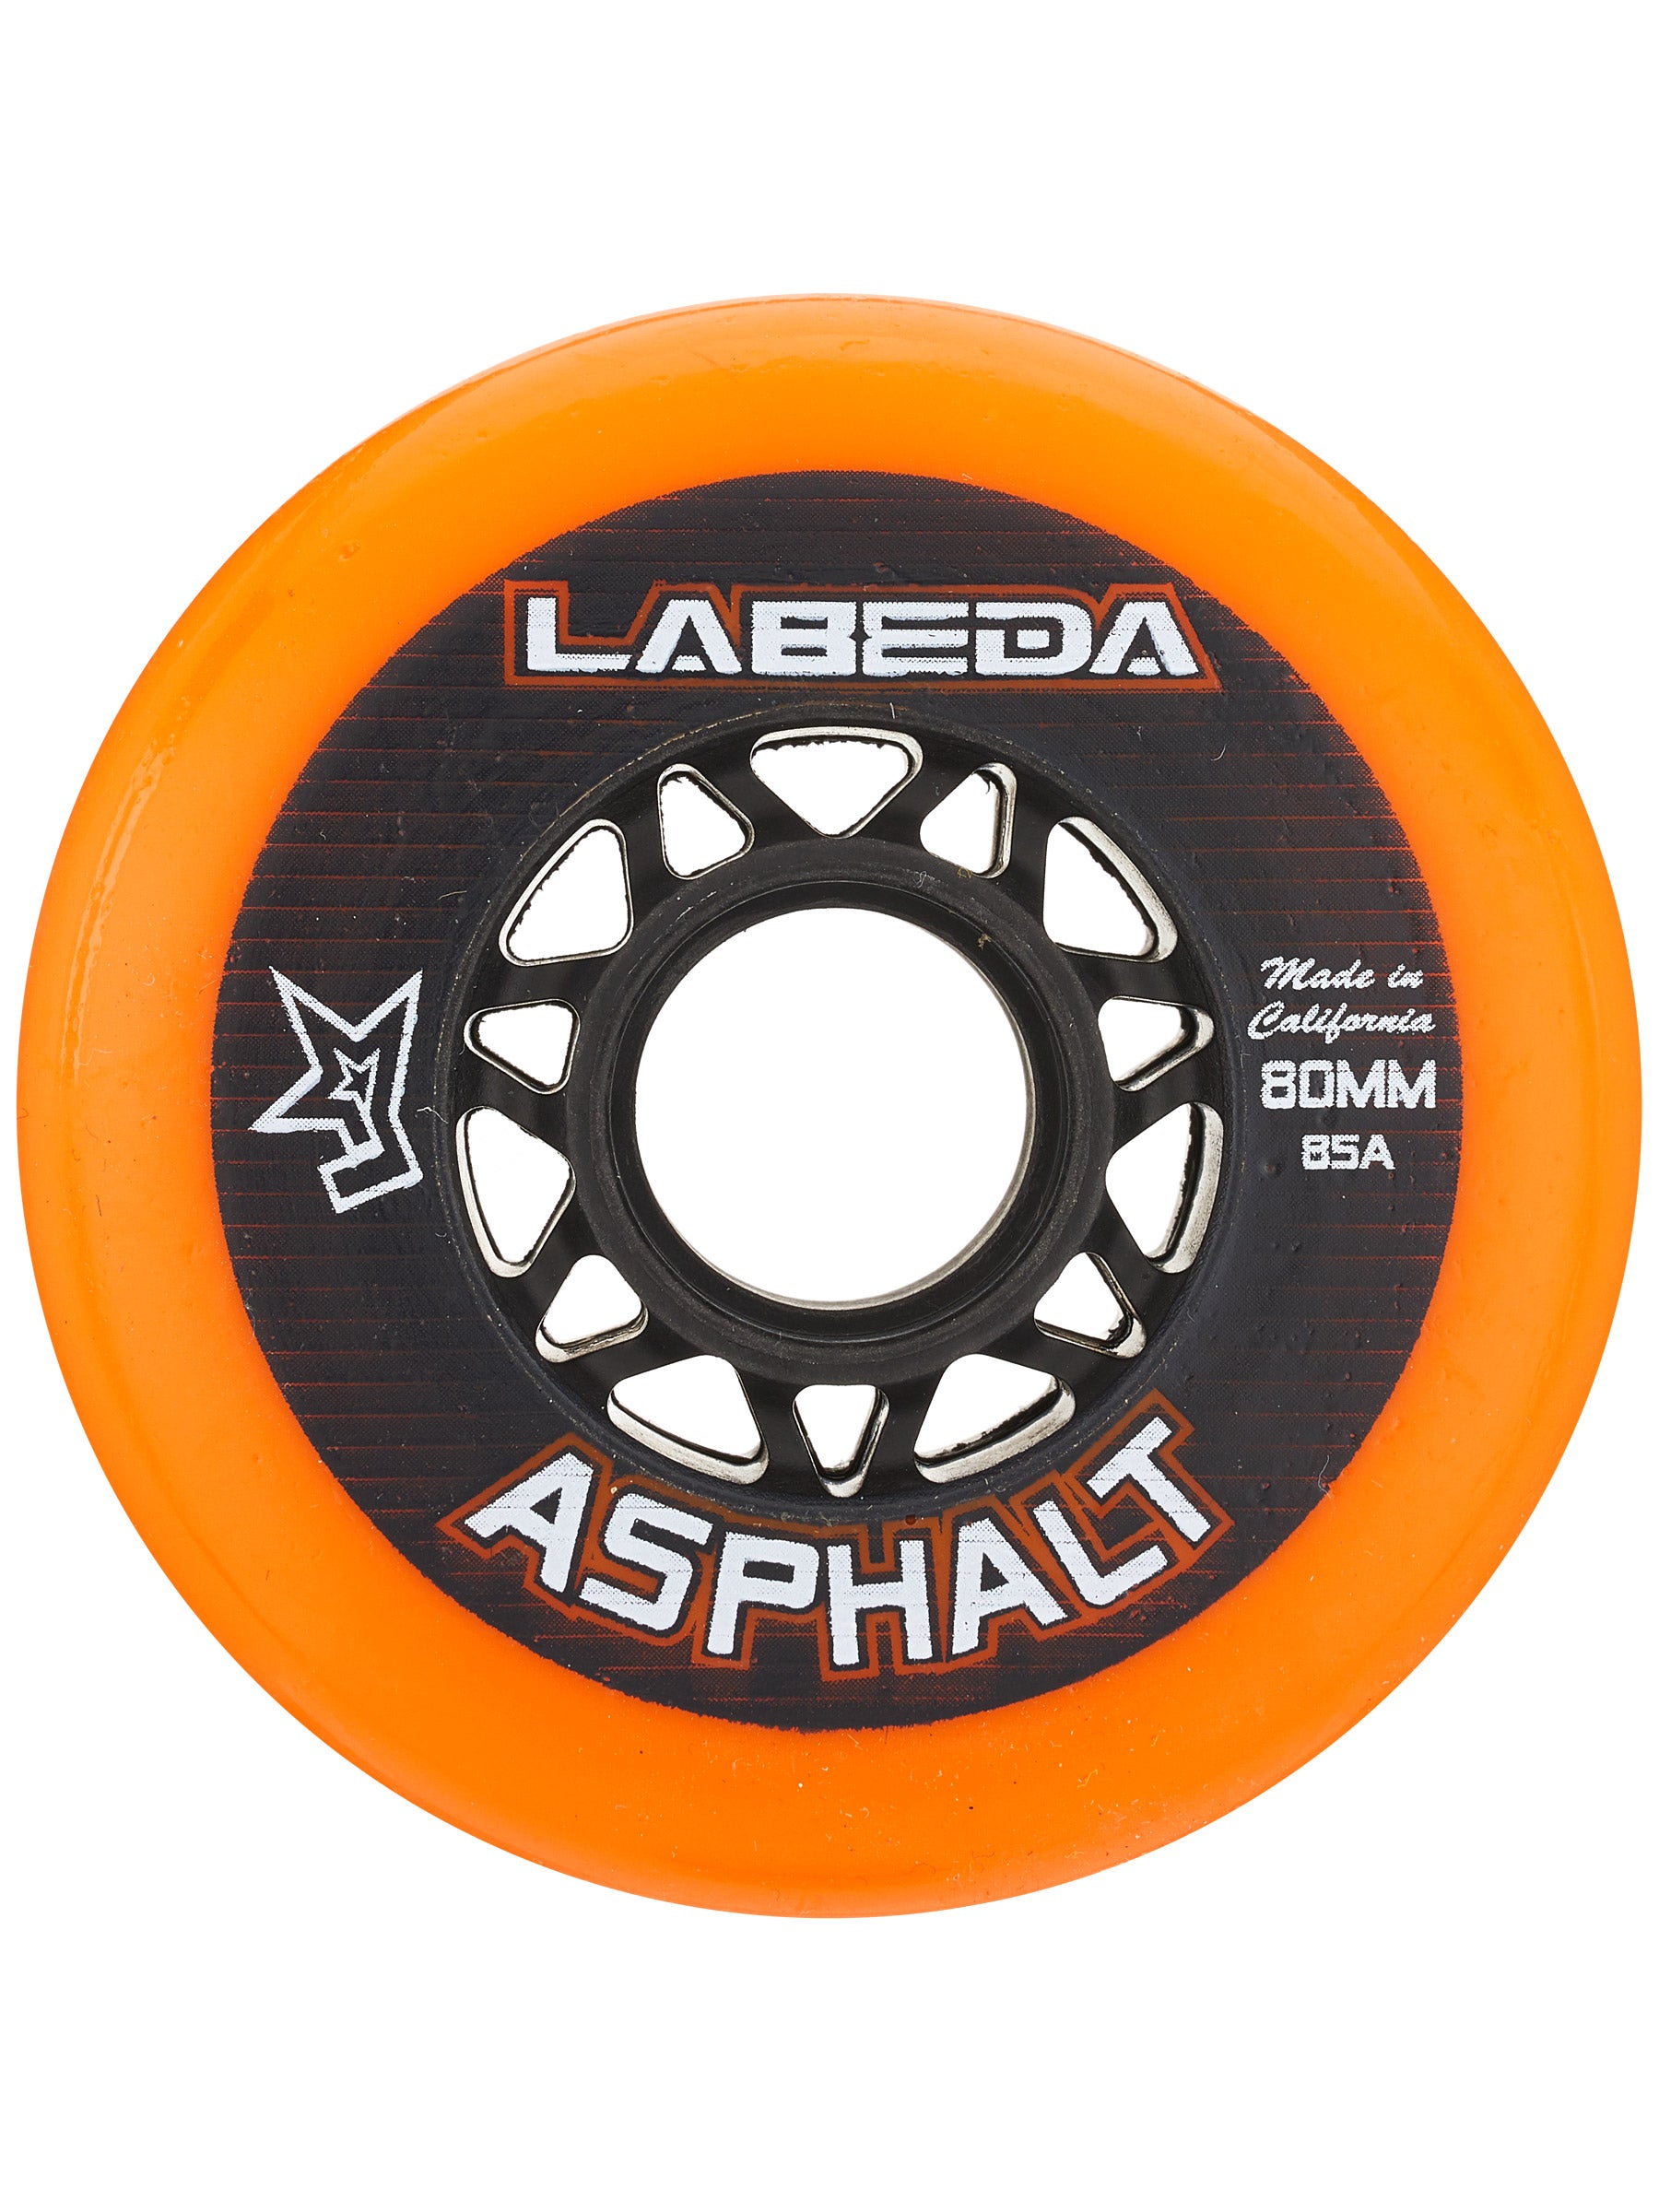 Labeda Asphalt Outdoor Inline Roller Hockey Wheels 68mm Orange 85A Outdoor 8-Pac 